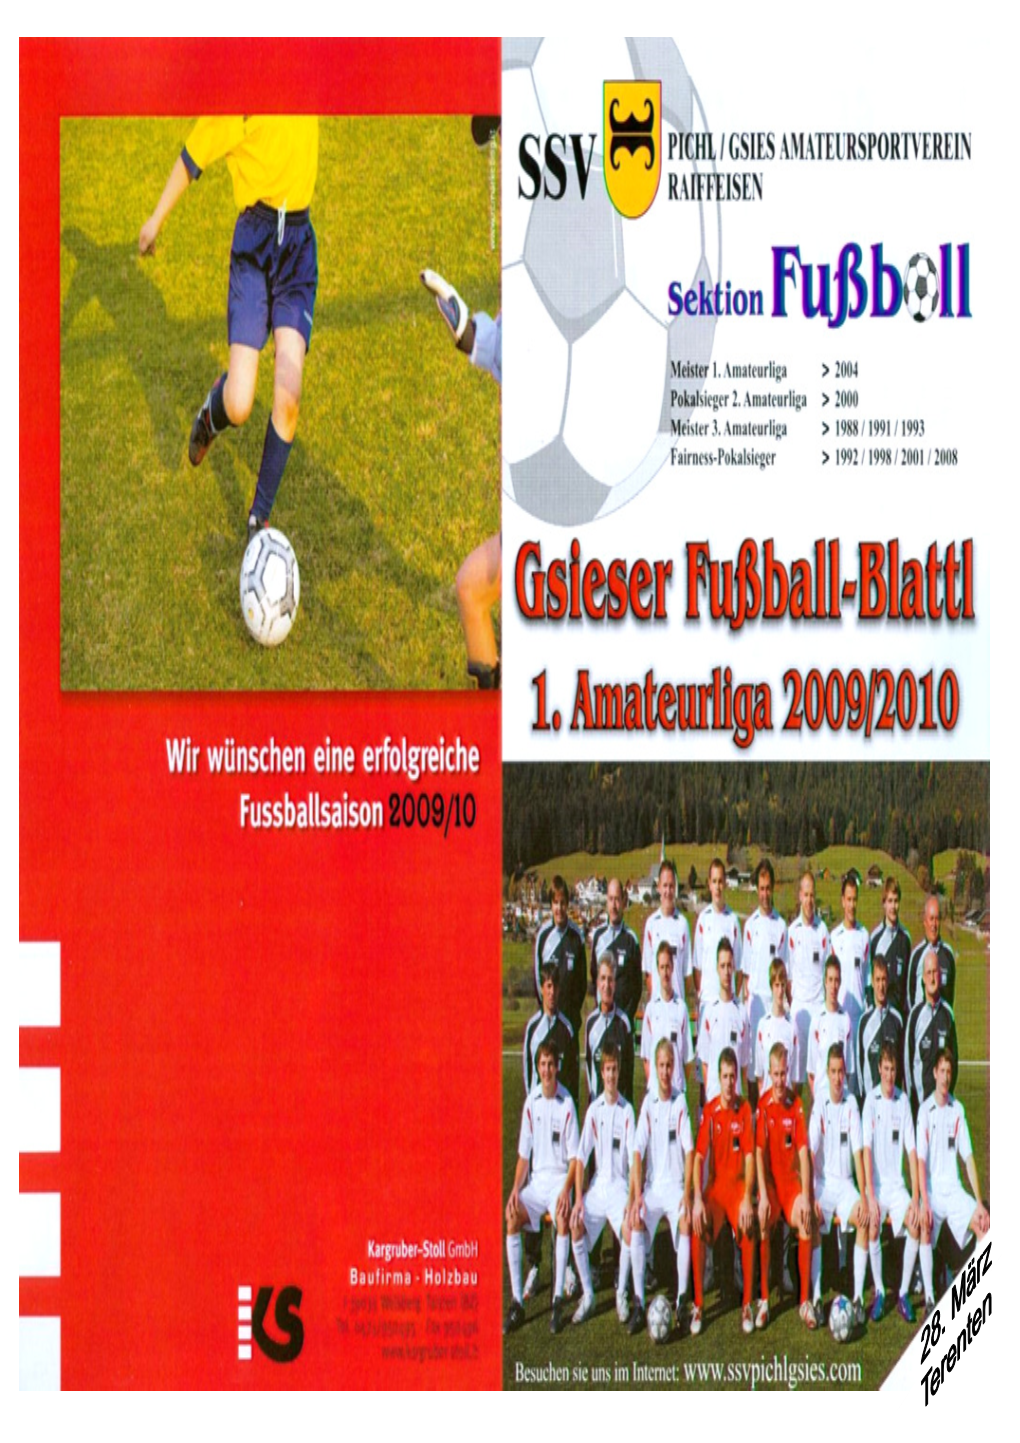 Gsieser Fussball-Blattl Vom 28. Maerz 2010 Terenten .Pdf